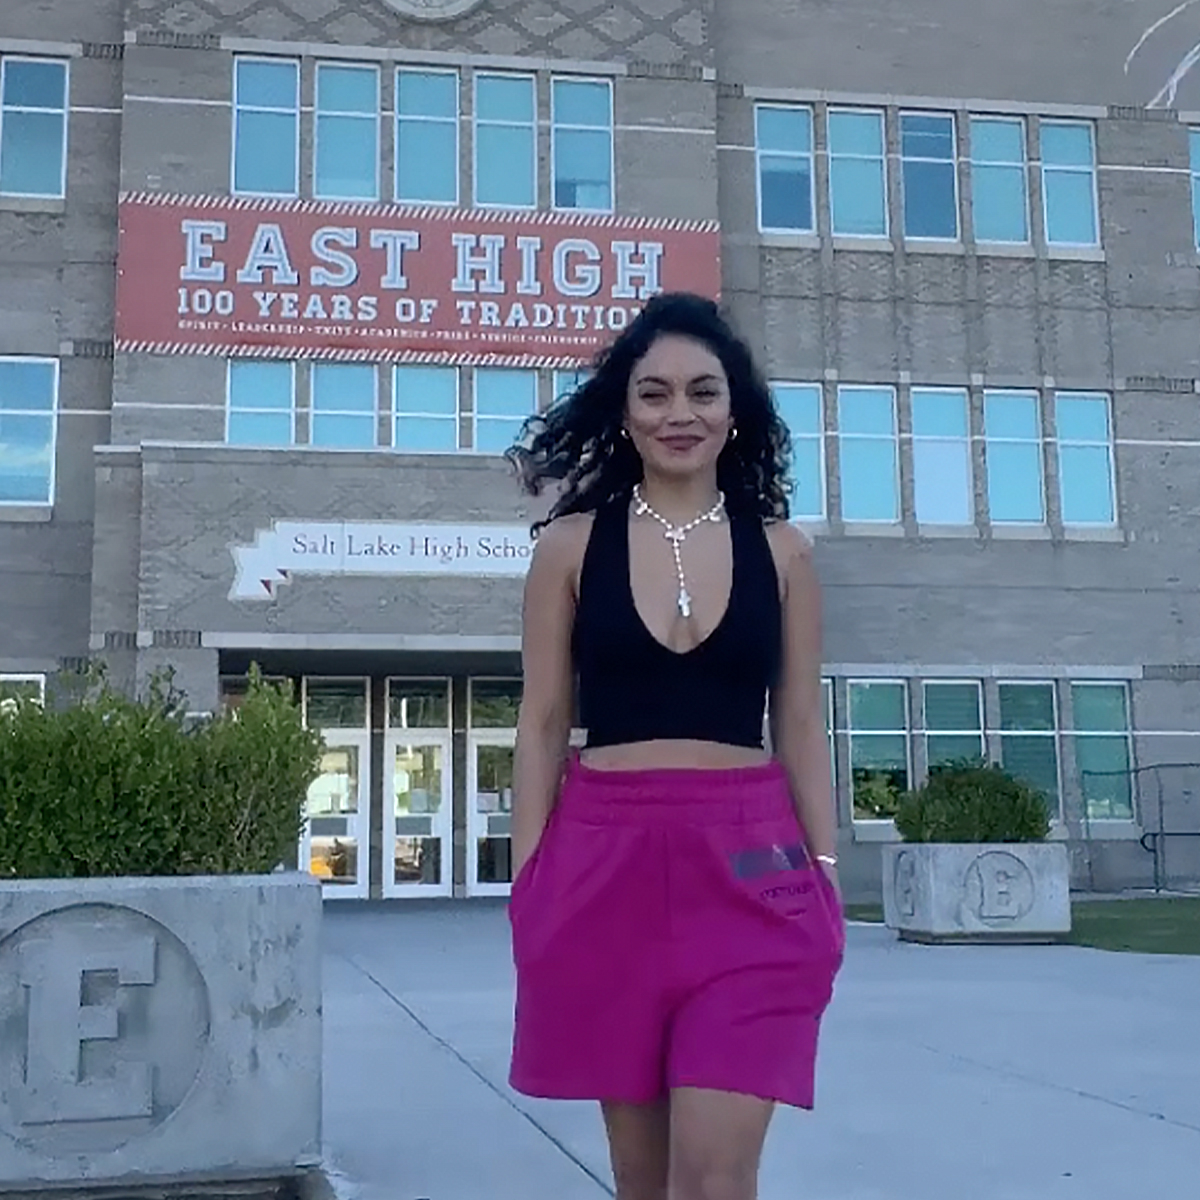 Vanessa Hudgens Returns to High School Musical’s East High